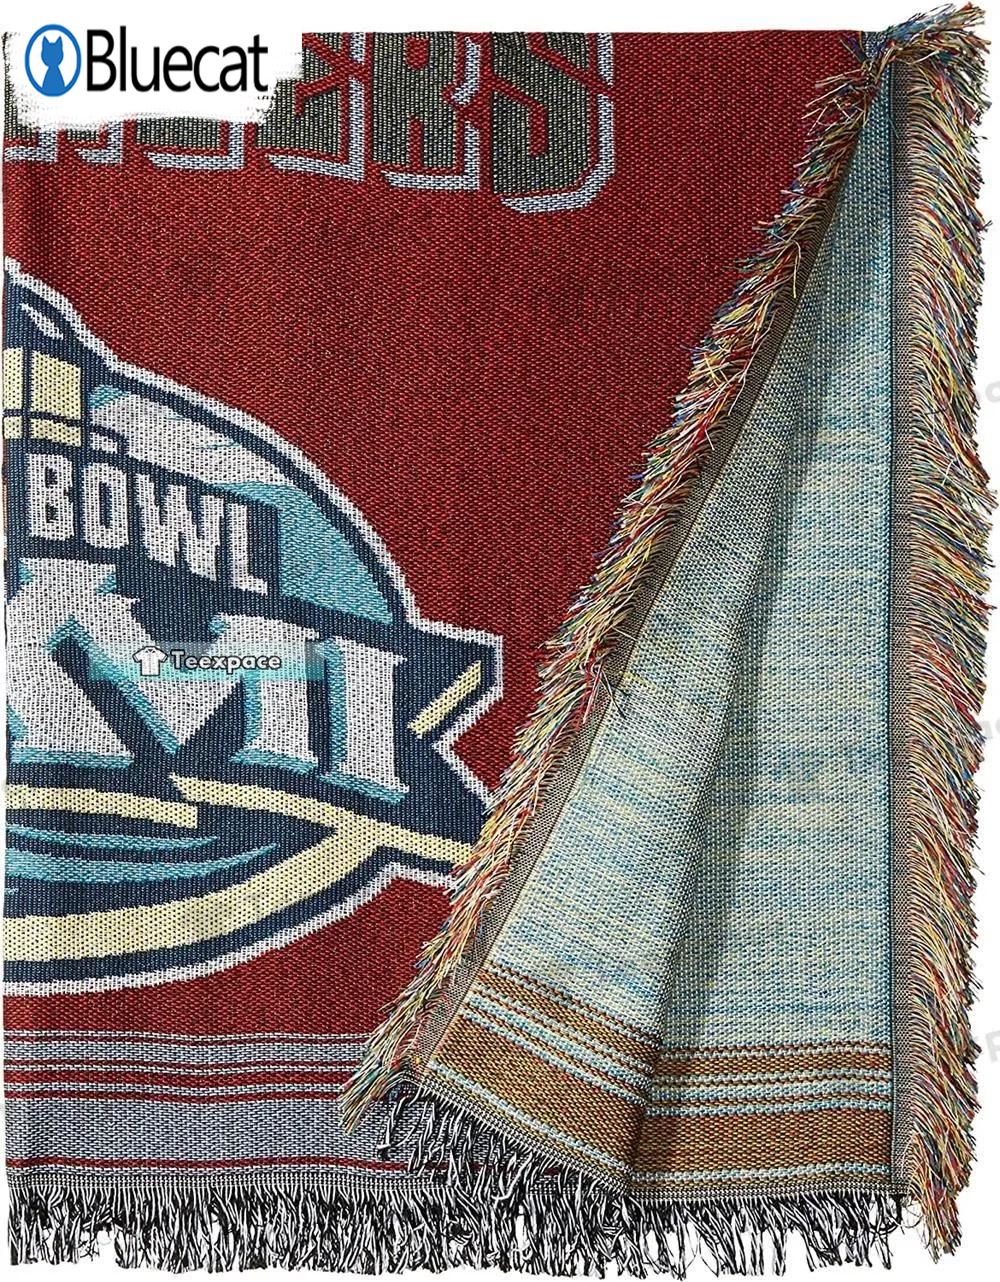 Buccaneers Super Bowl Woven Tapestry Blanket 